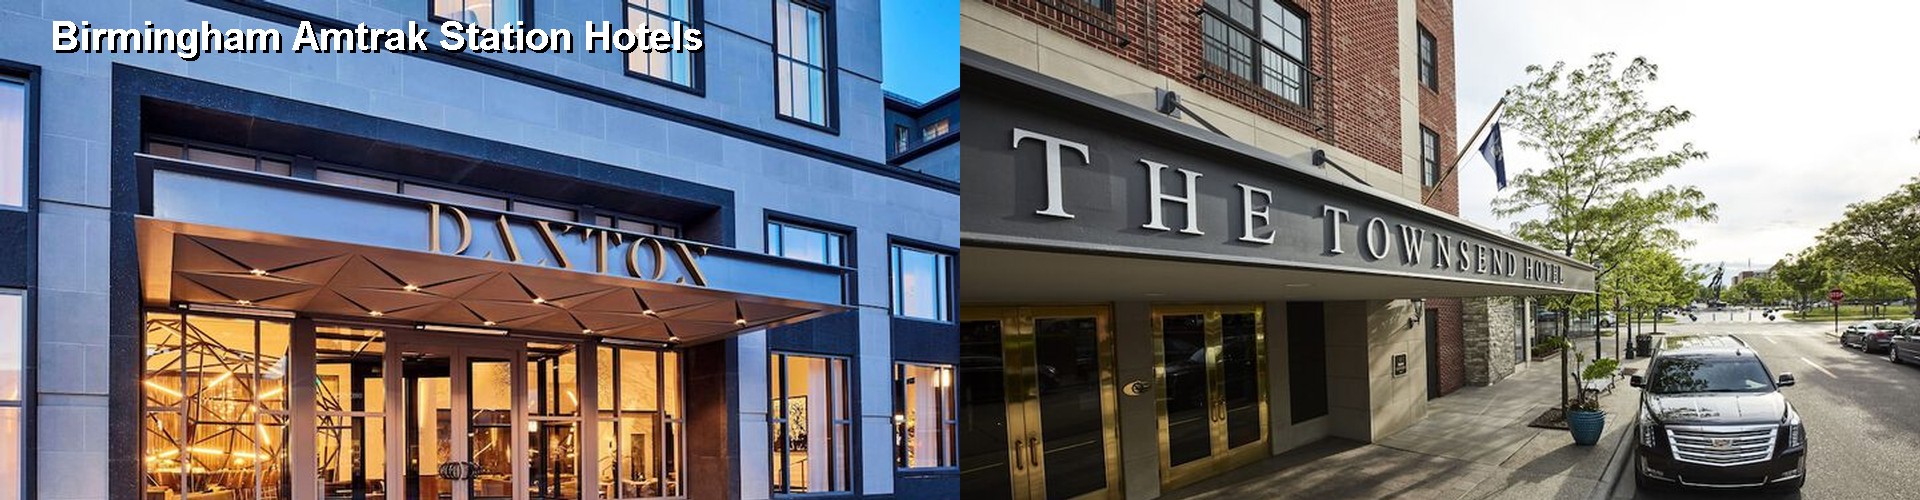 5 Best Hotels near Birmingham Amtrak Station